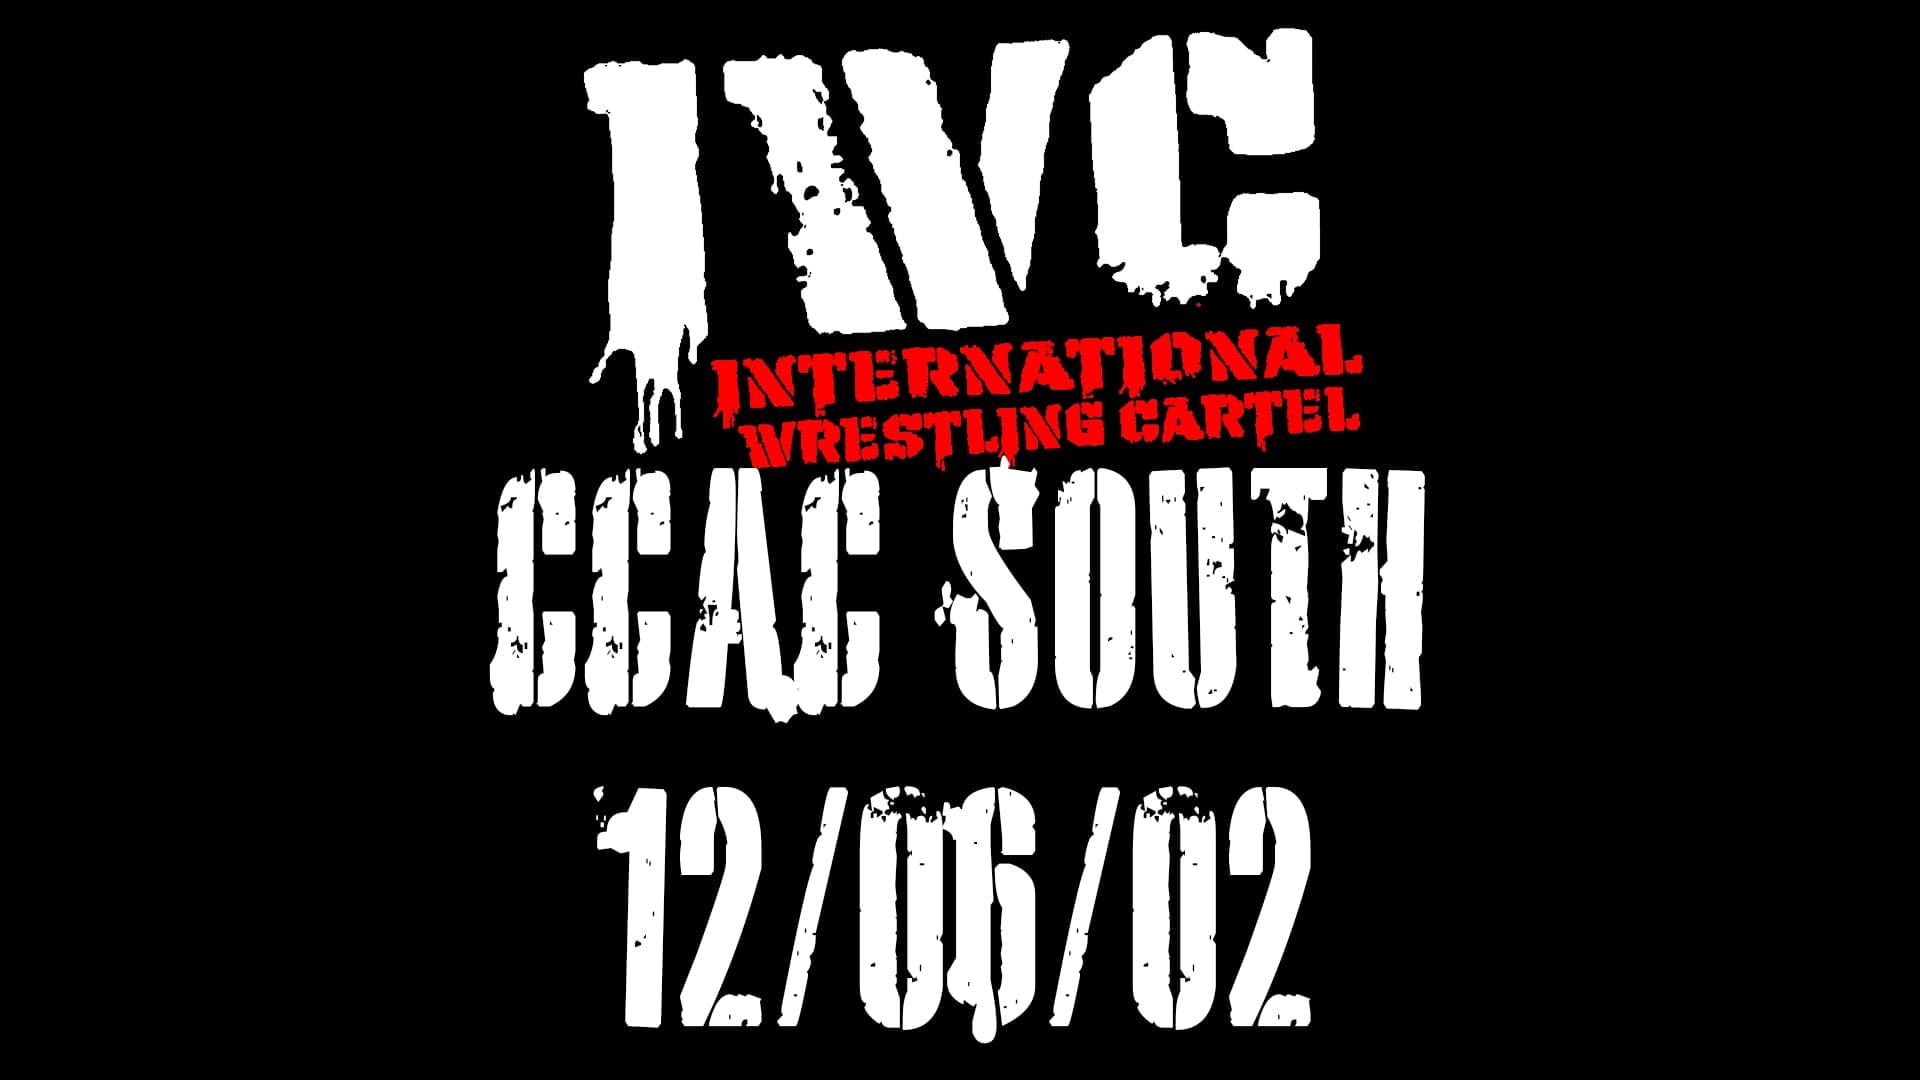 CCAC South